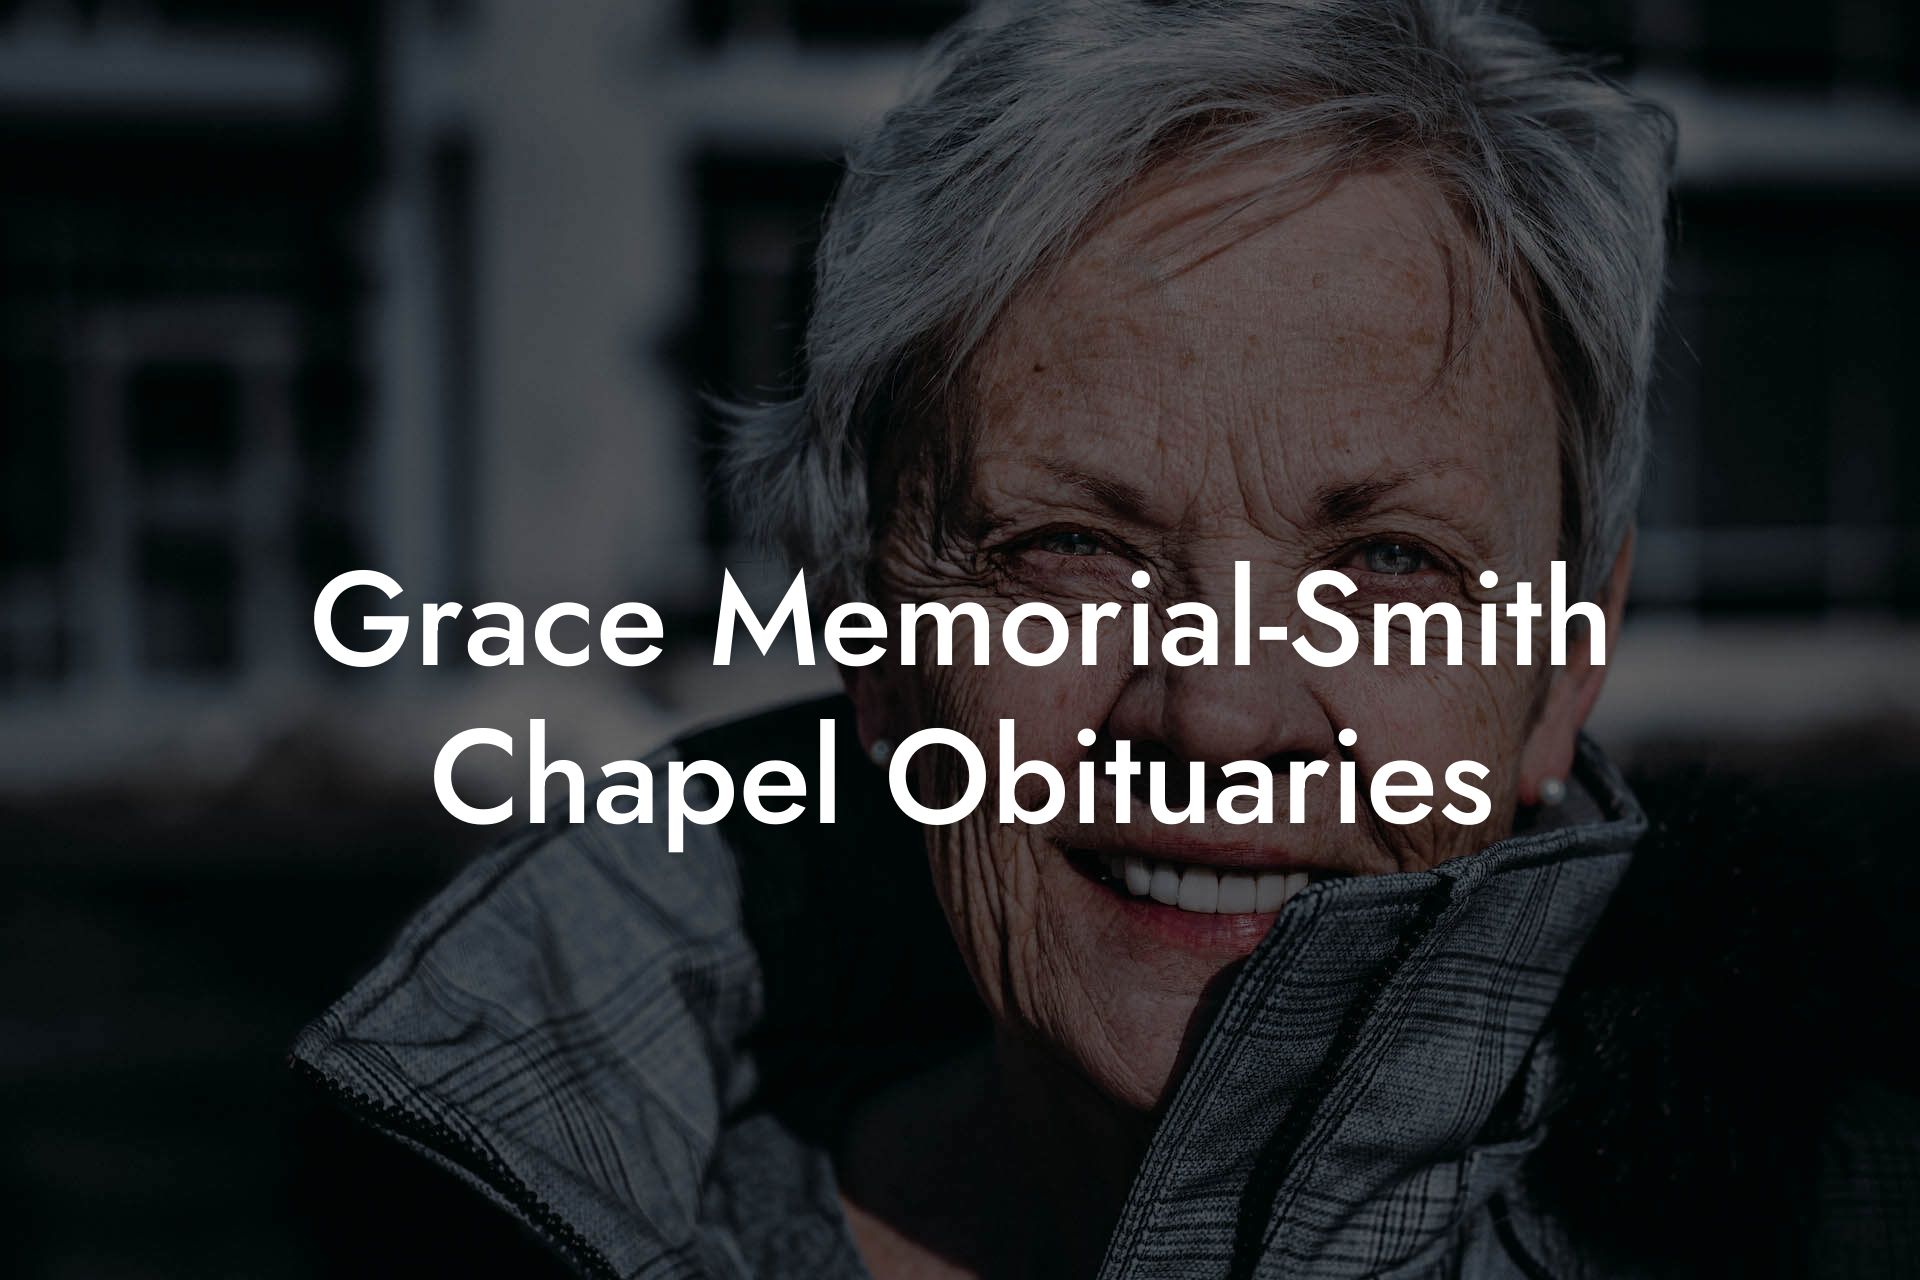 Grace Memorial-Smith Chapel Obituaries